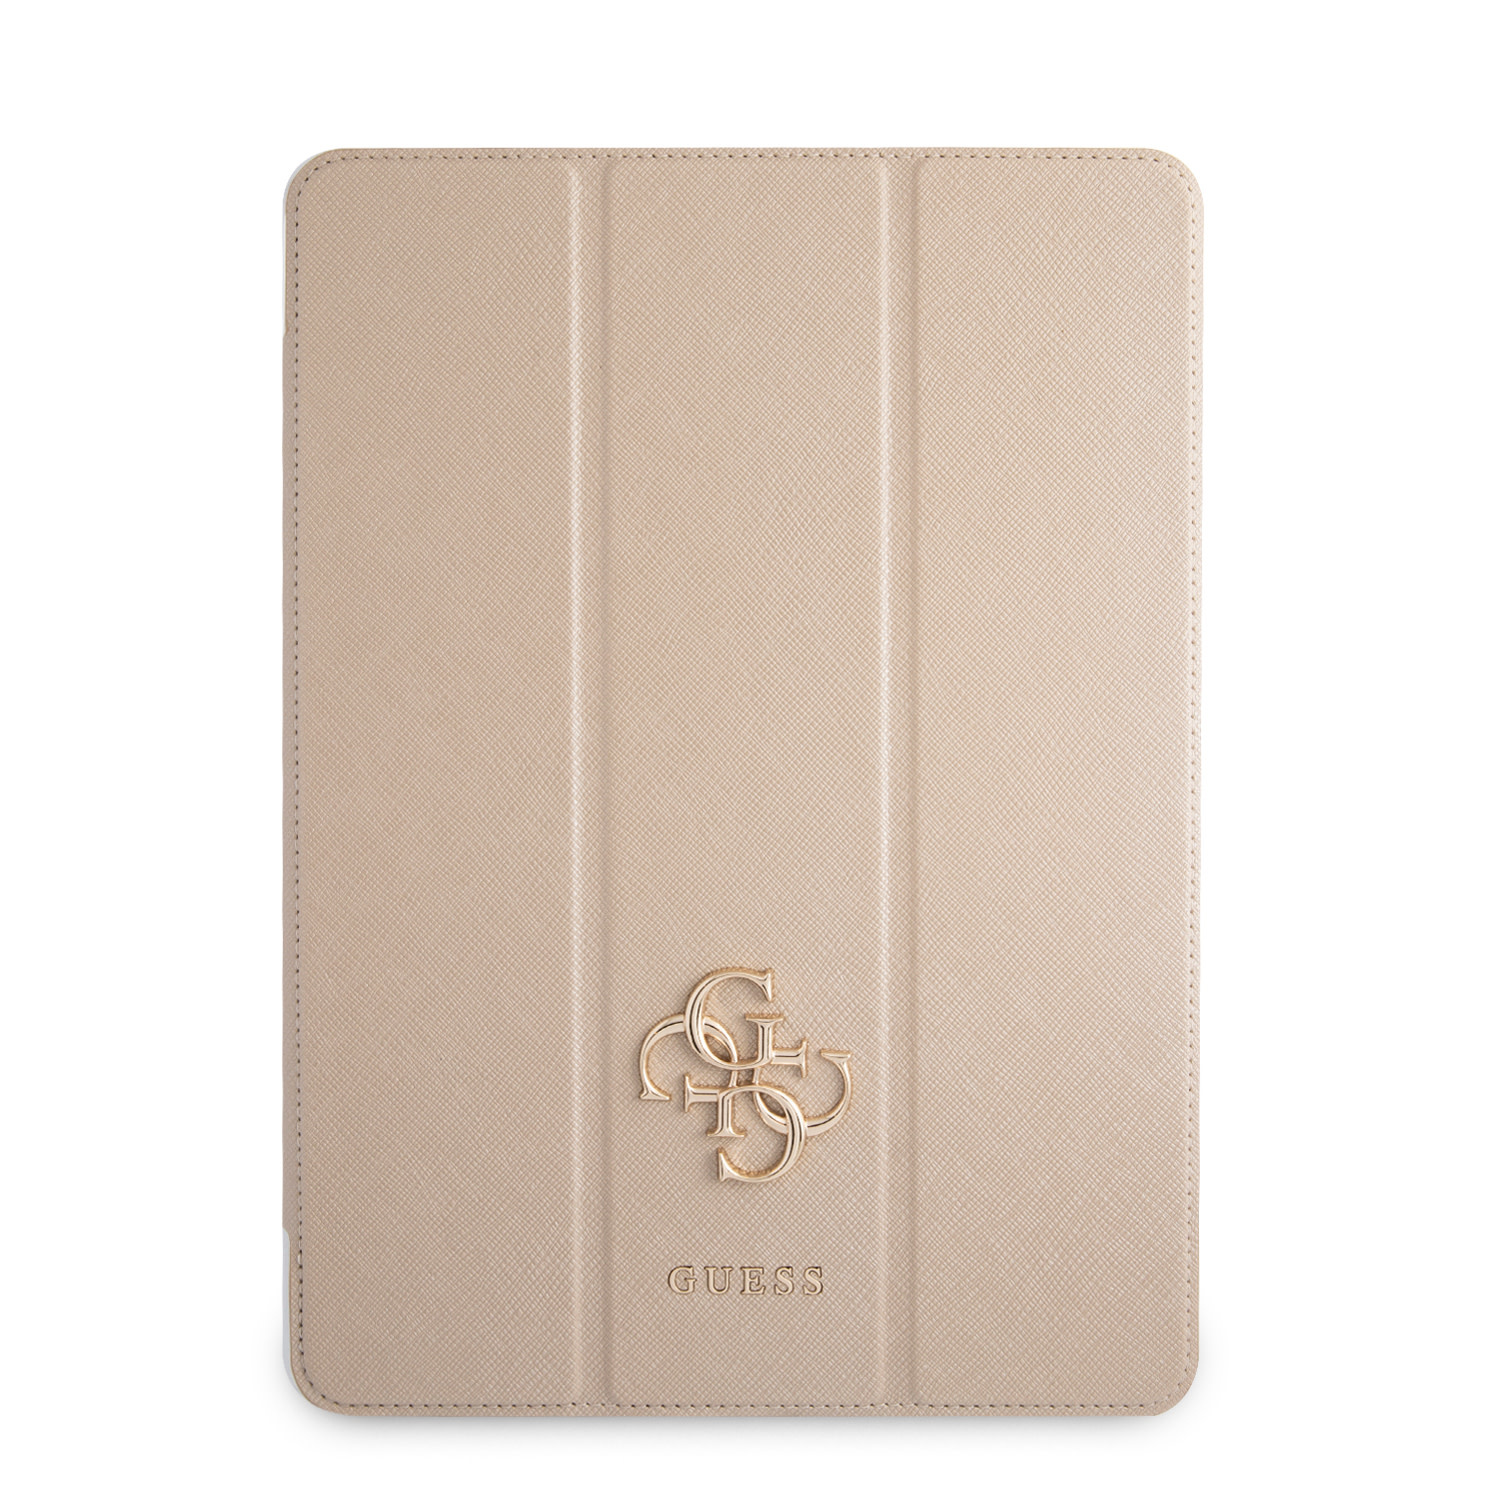 Guess Folio iPad Pro 11 colos (2021) könyvtok - ar